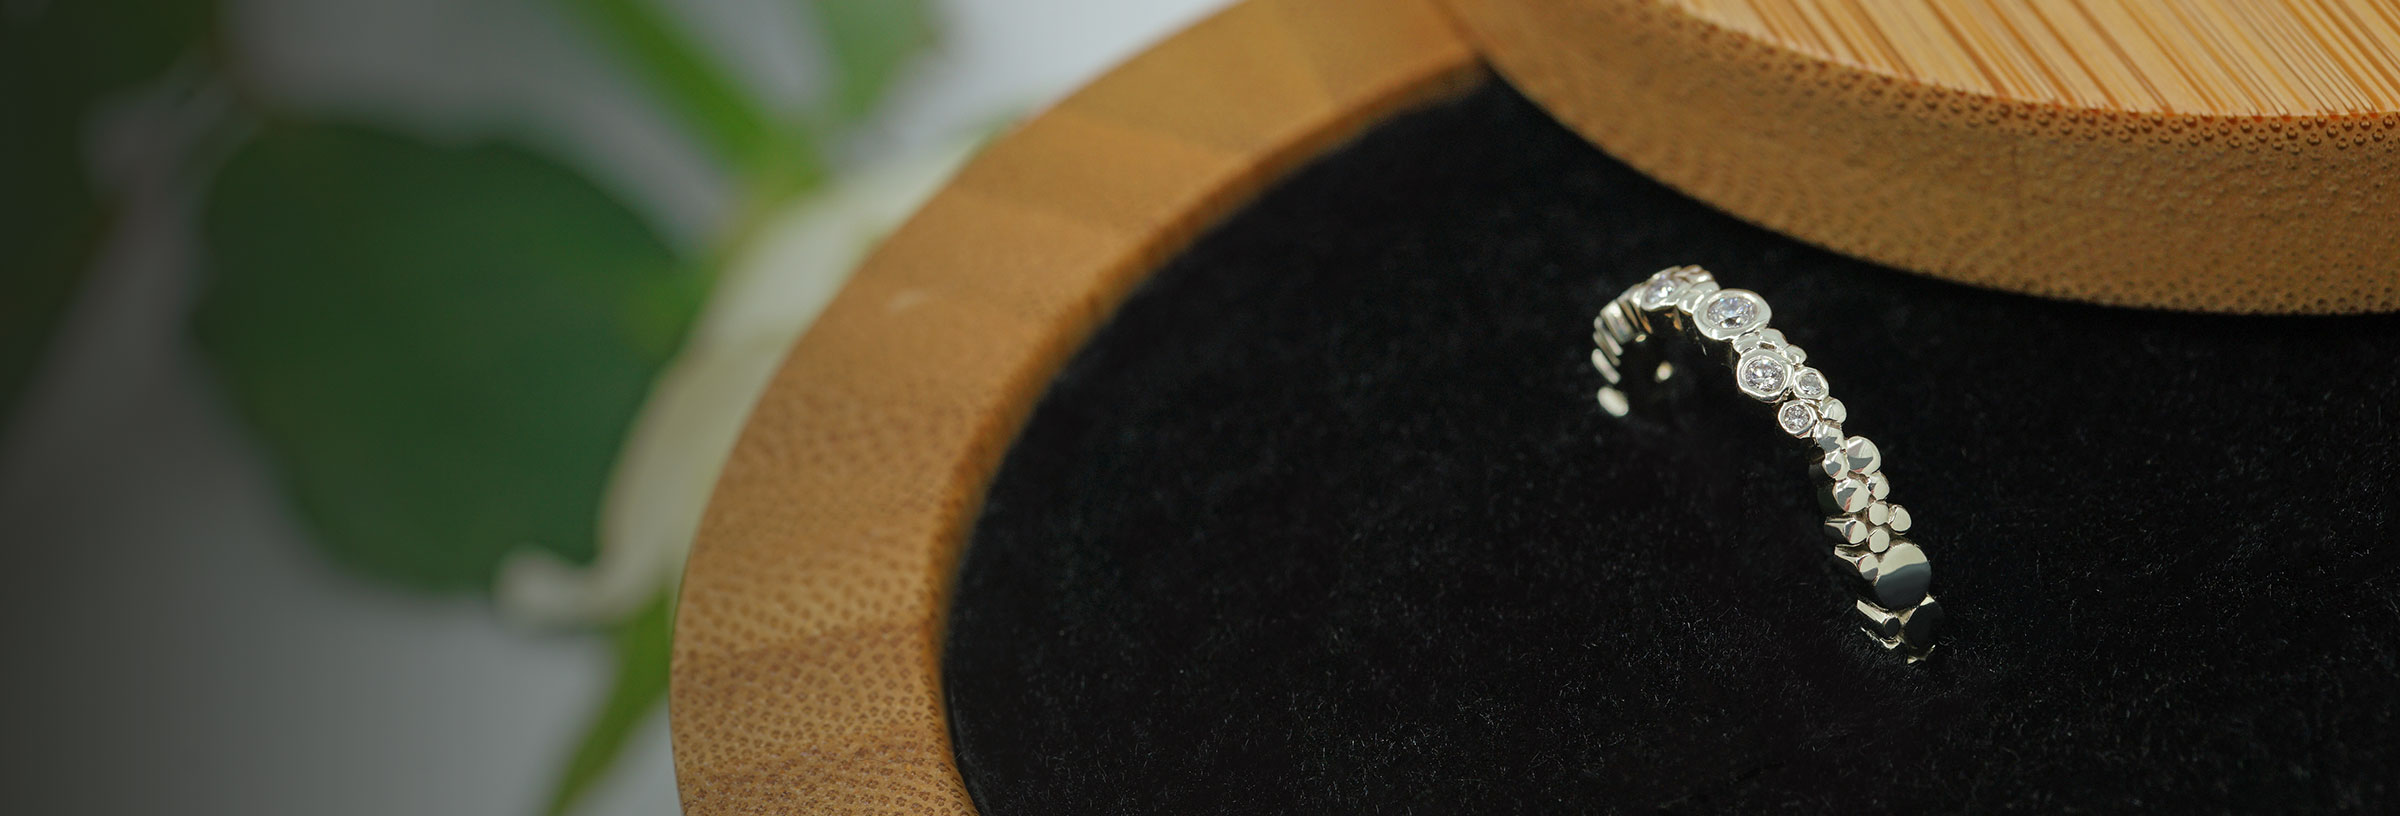 aboriginal-inspired-fairtrade-9-carat-white-gold-and-diamond-eternity-ring